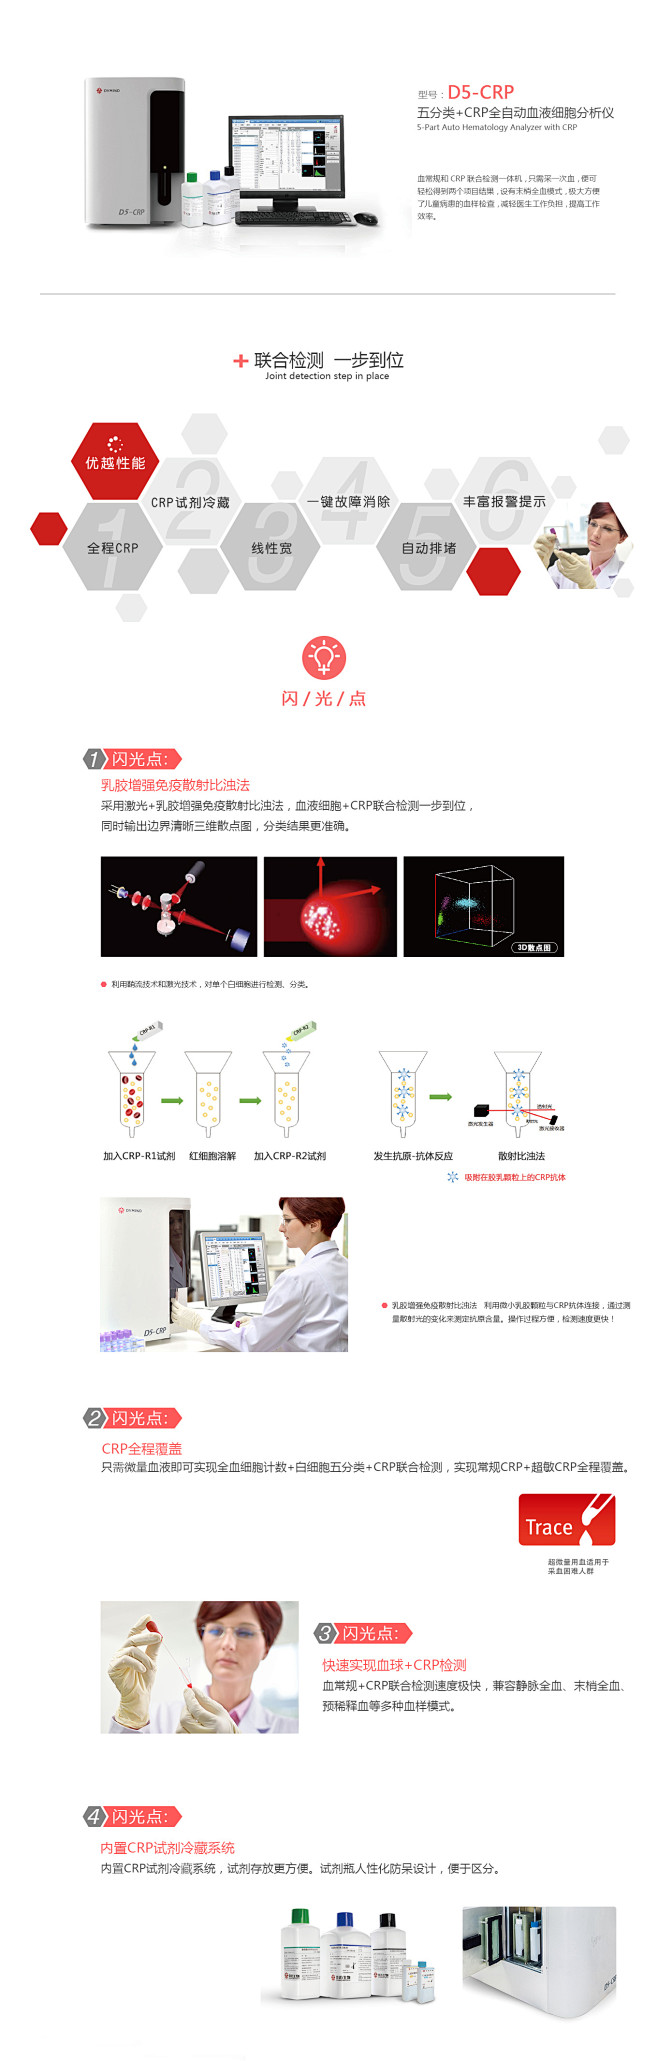 D5-CRP - 五分类血液细胞分析仪 ...